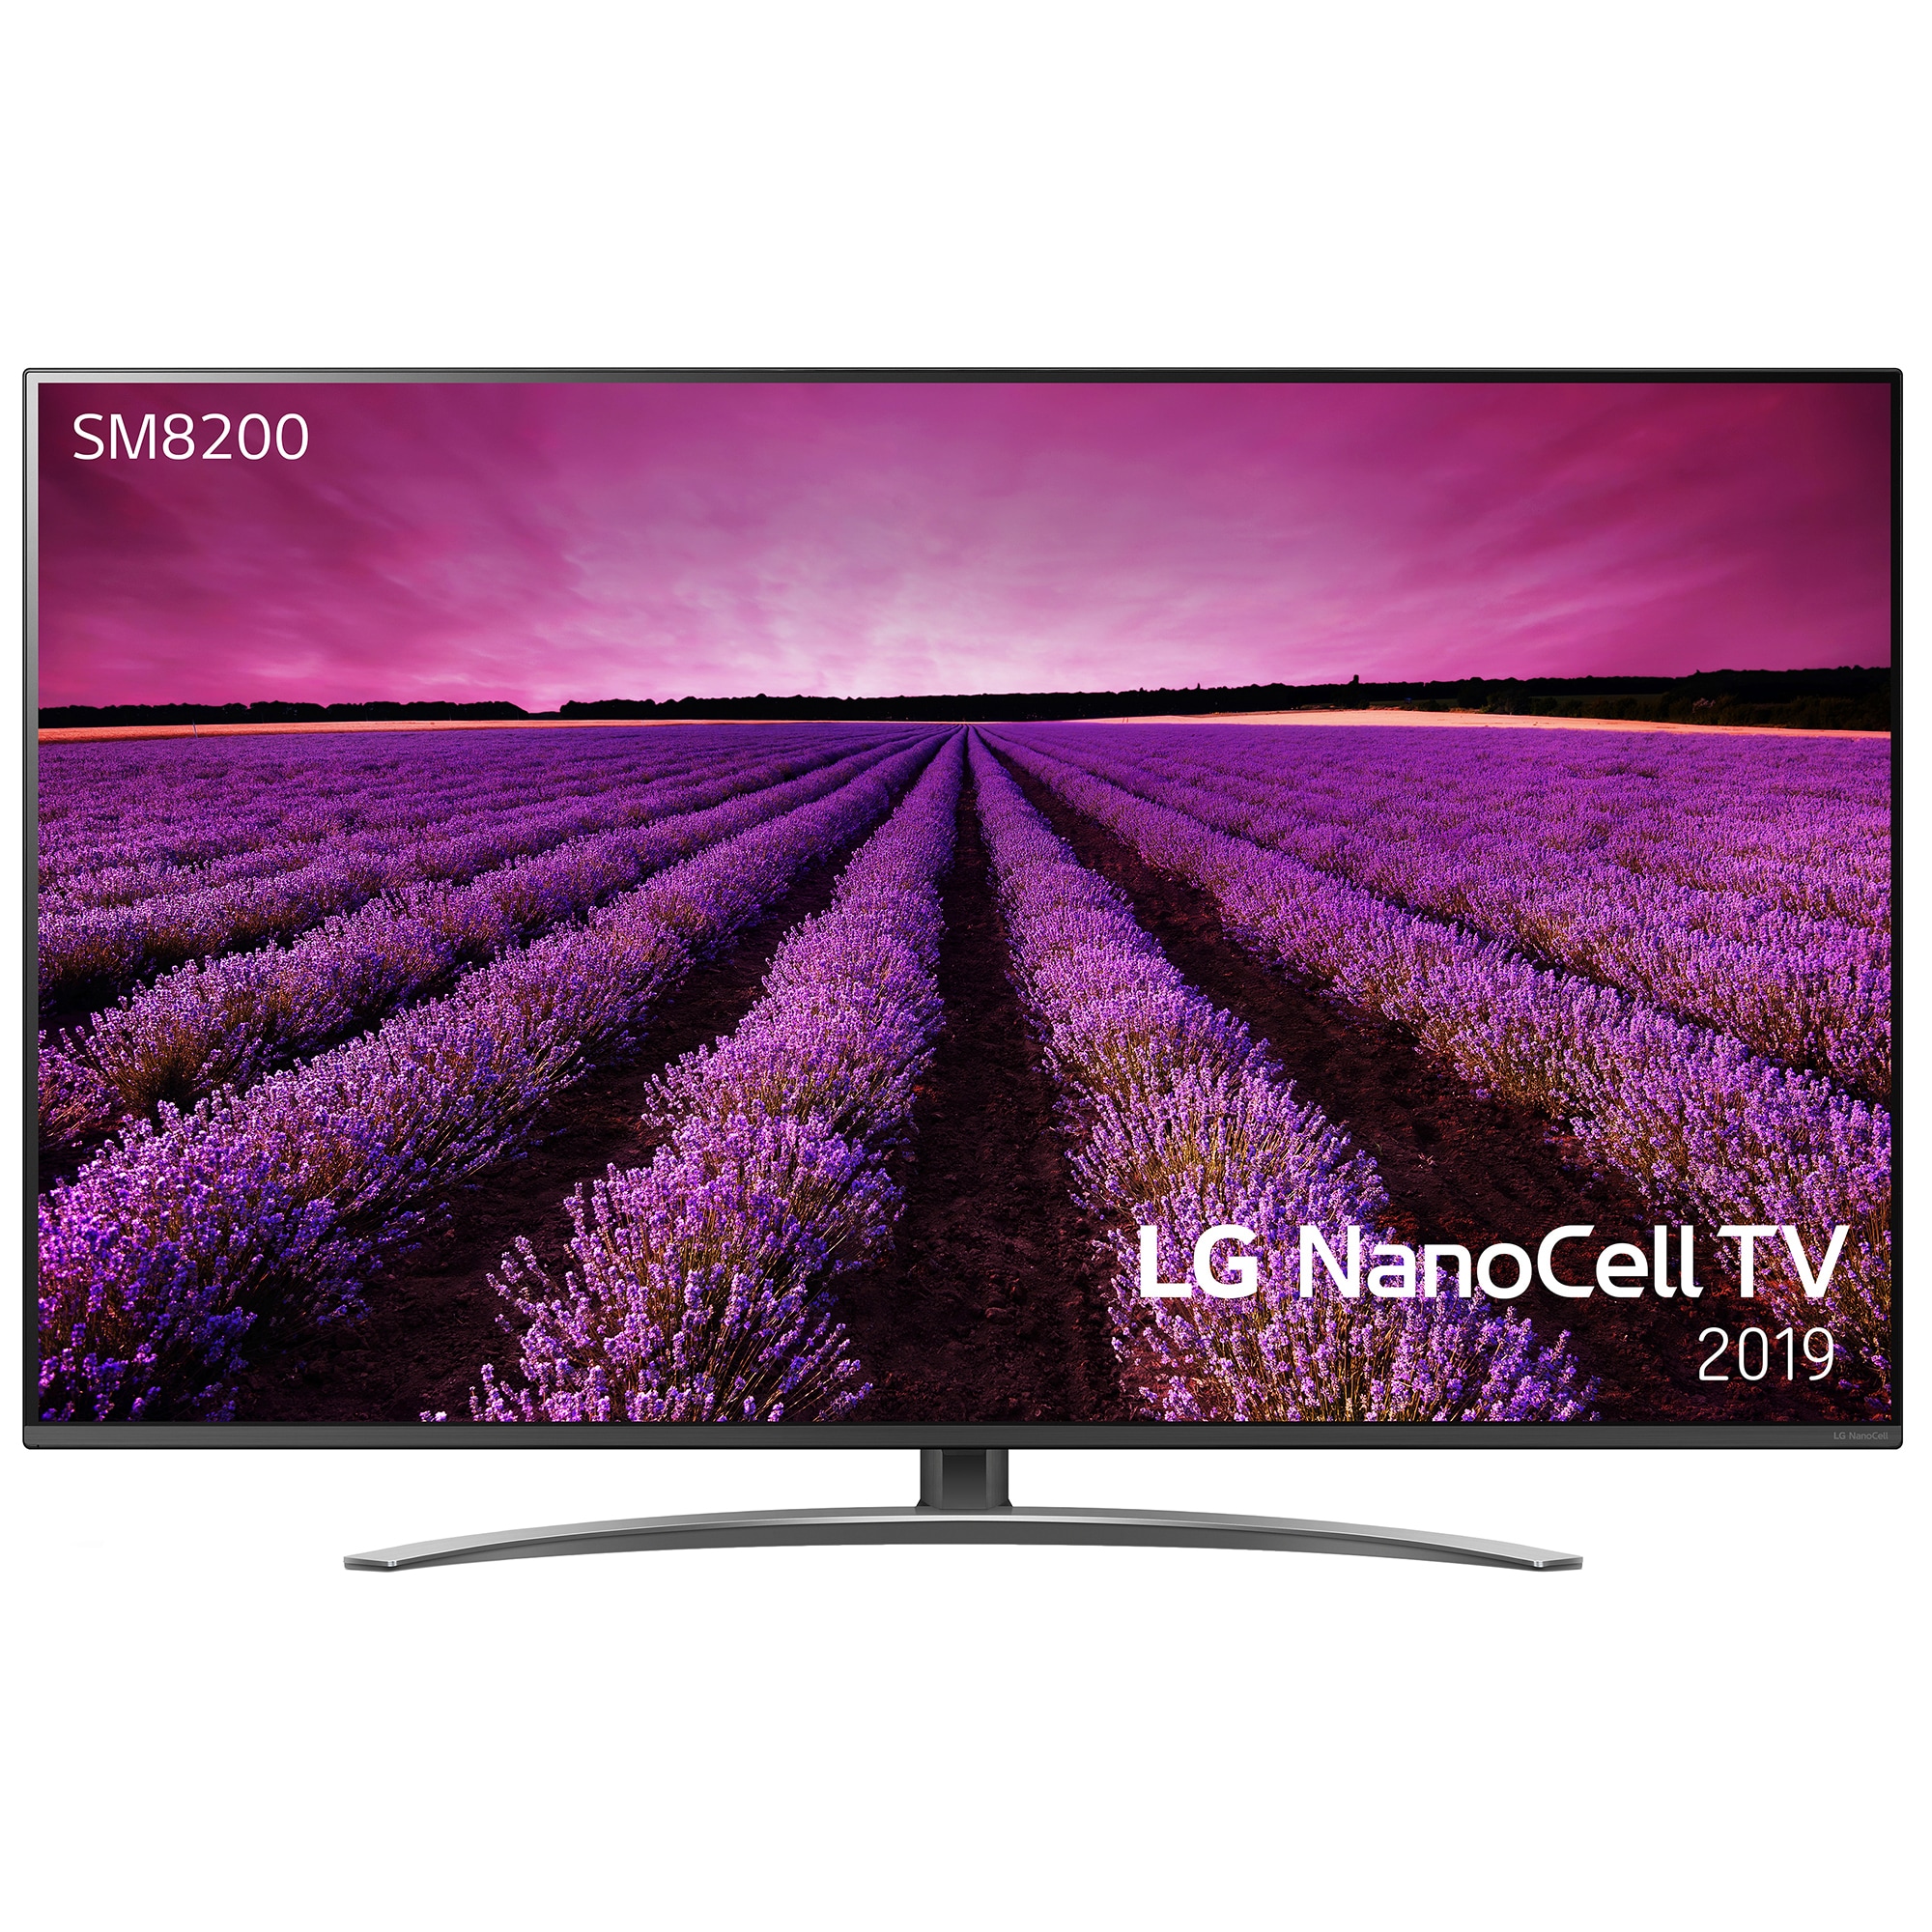 LG NanoCell TV 55" - 55SM8200 Elgiganten